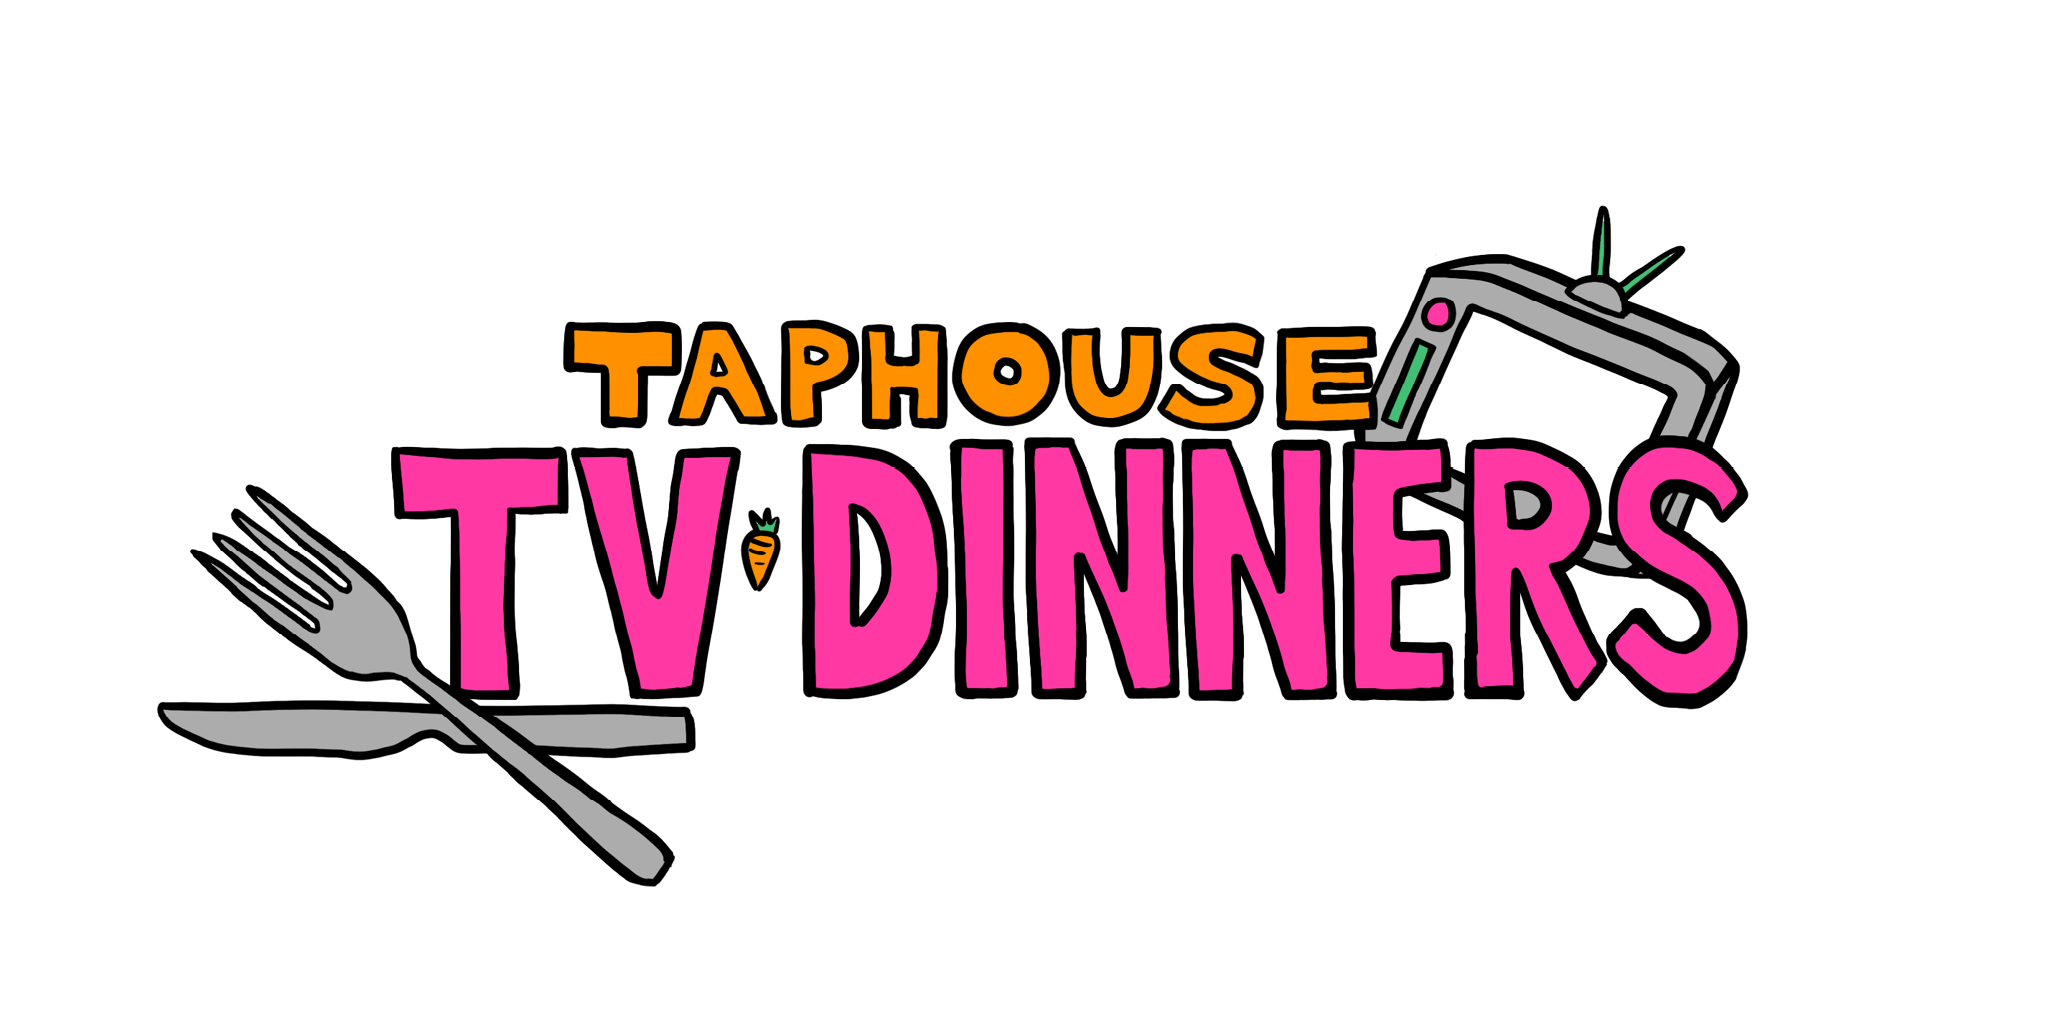 The TV Dinners logo